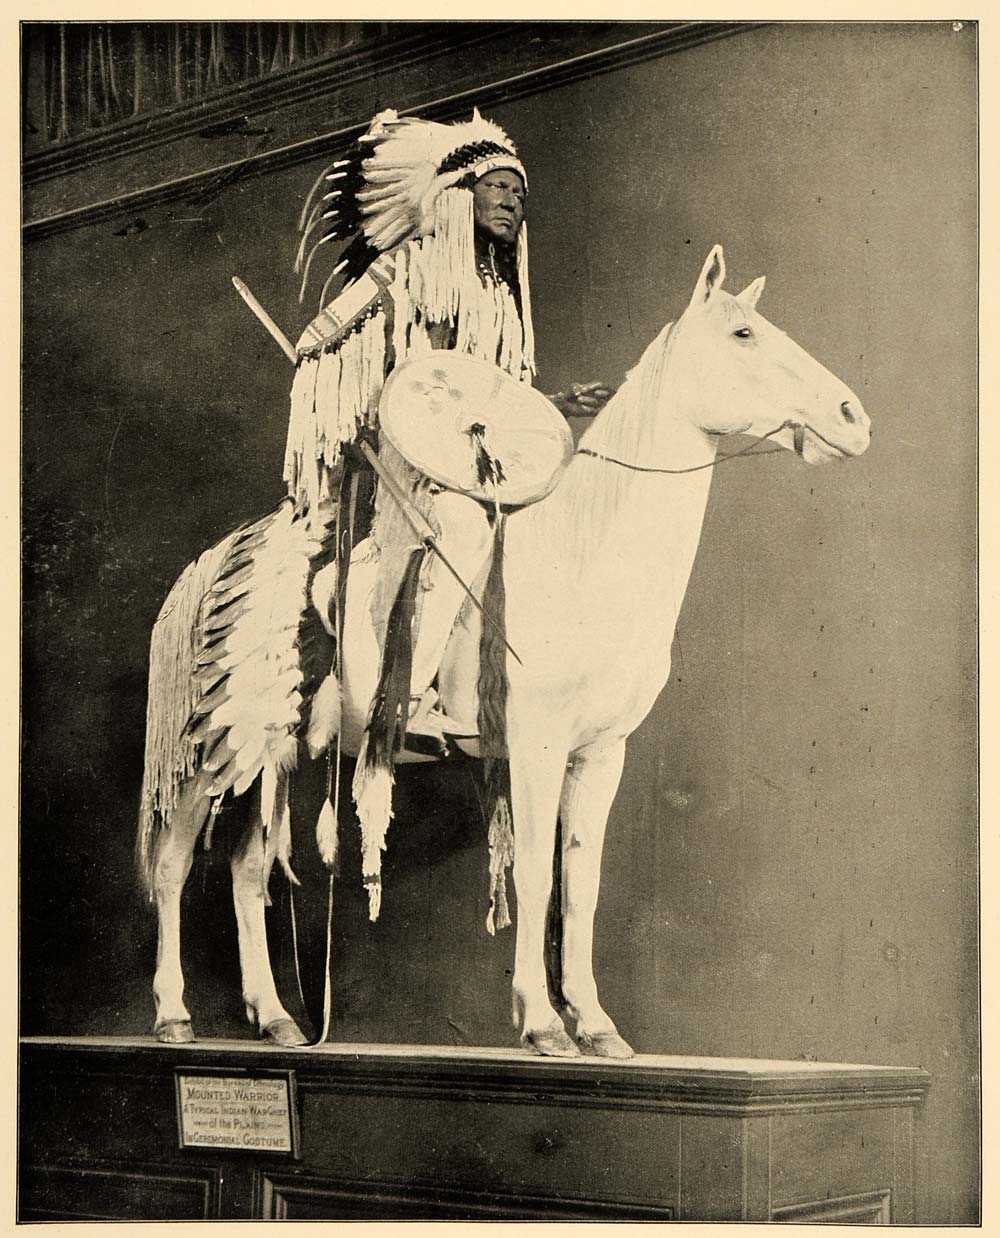 1893 Chicago World's Fair Indian Chief Warrior Exhibit ORIGINAL HISTORIC IMAGE